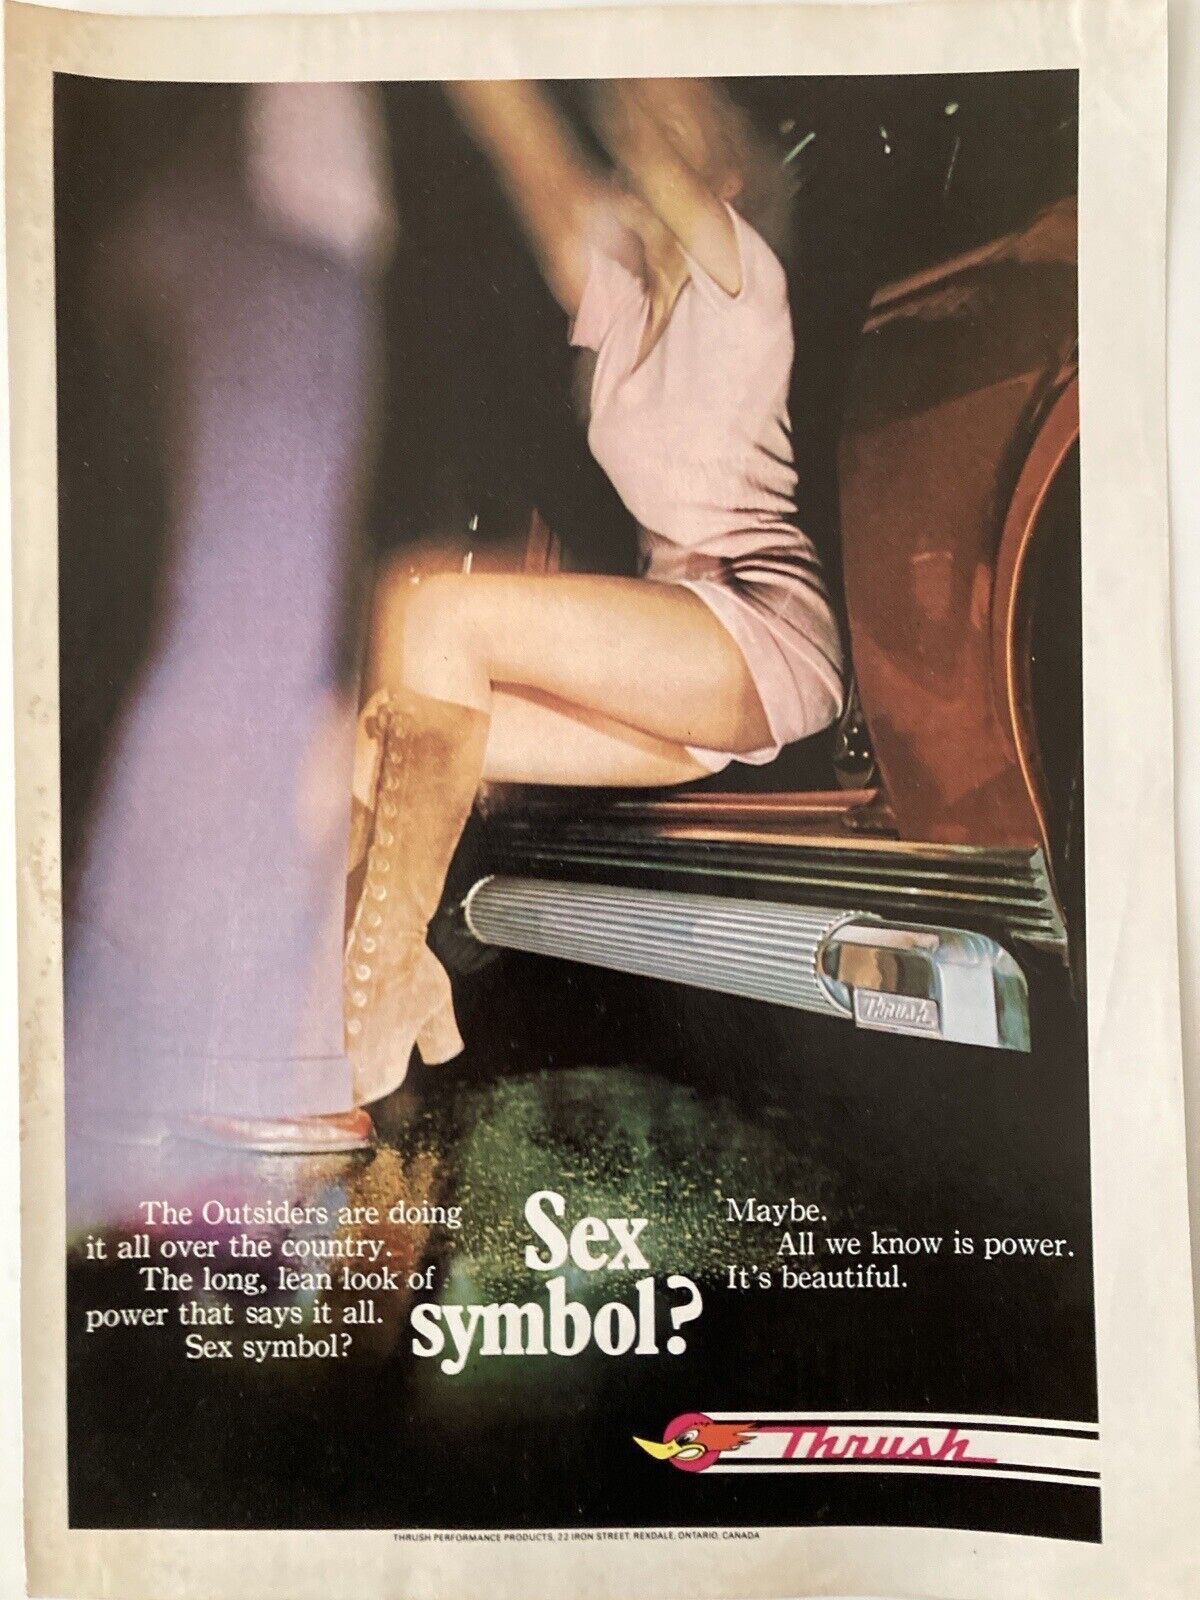 1975 Thrush Muffler Exhaust Print Ad Sex Symbol Sidepipes